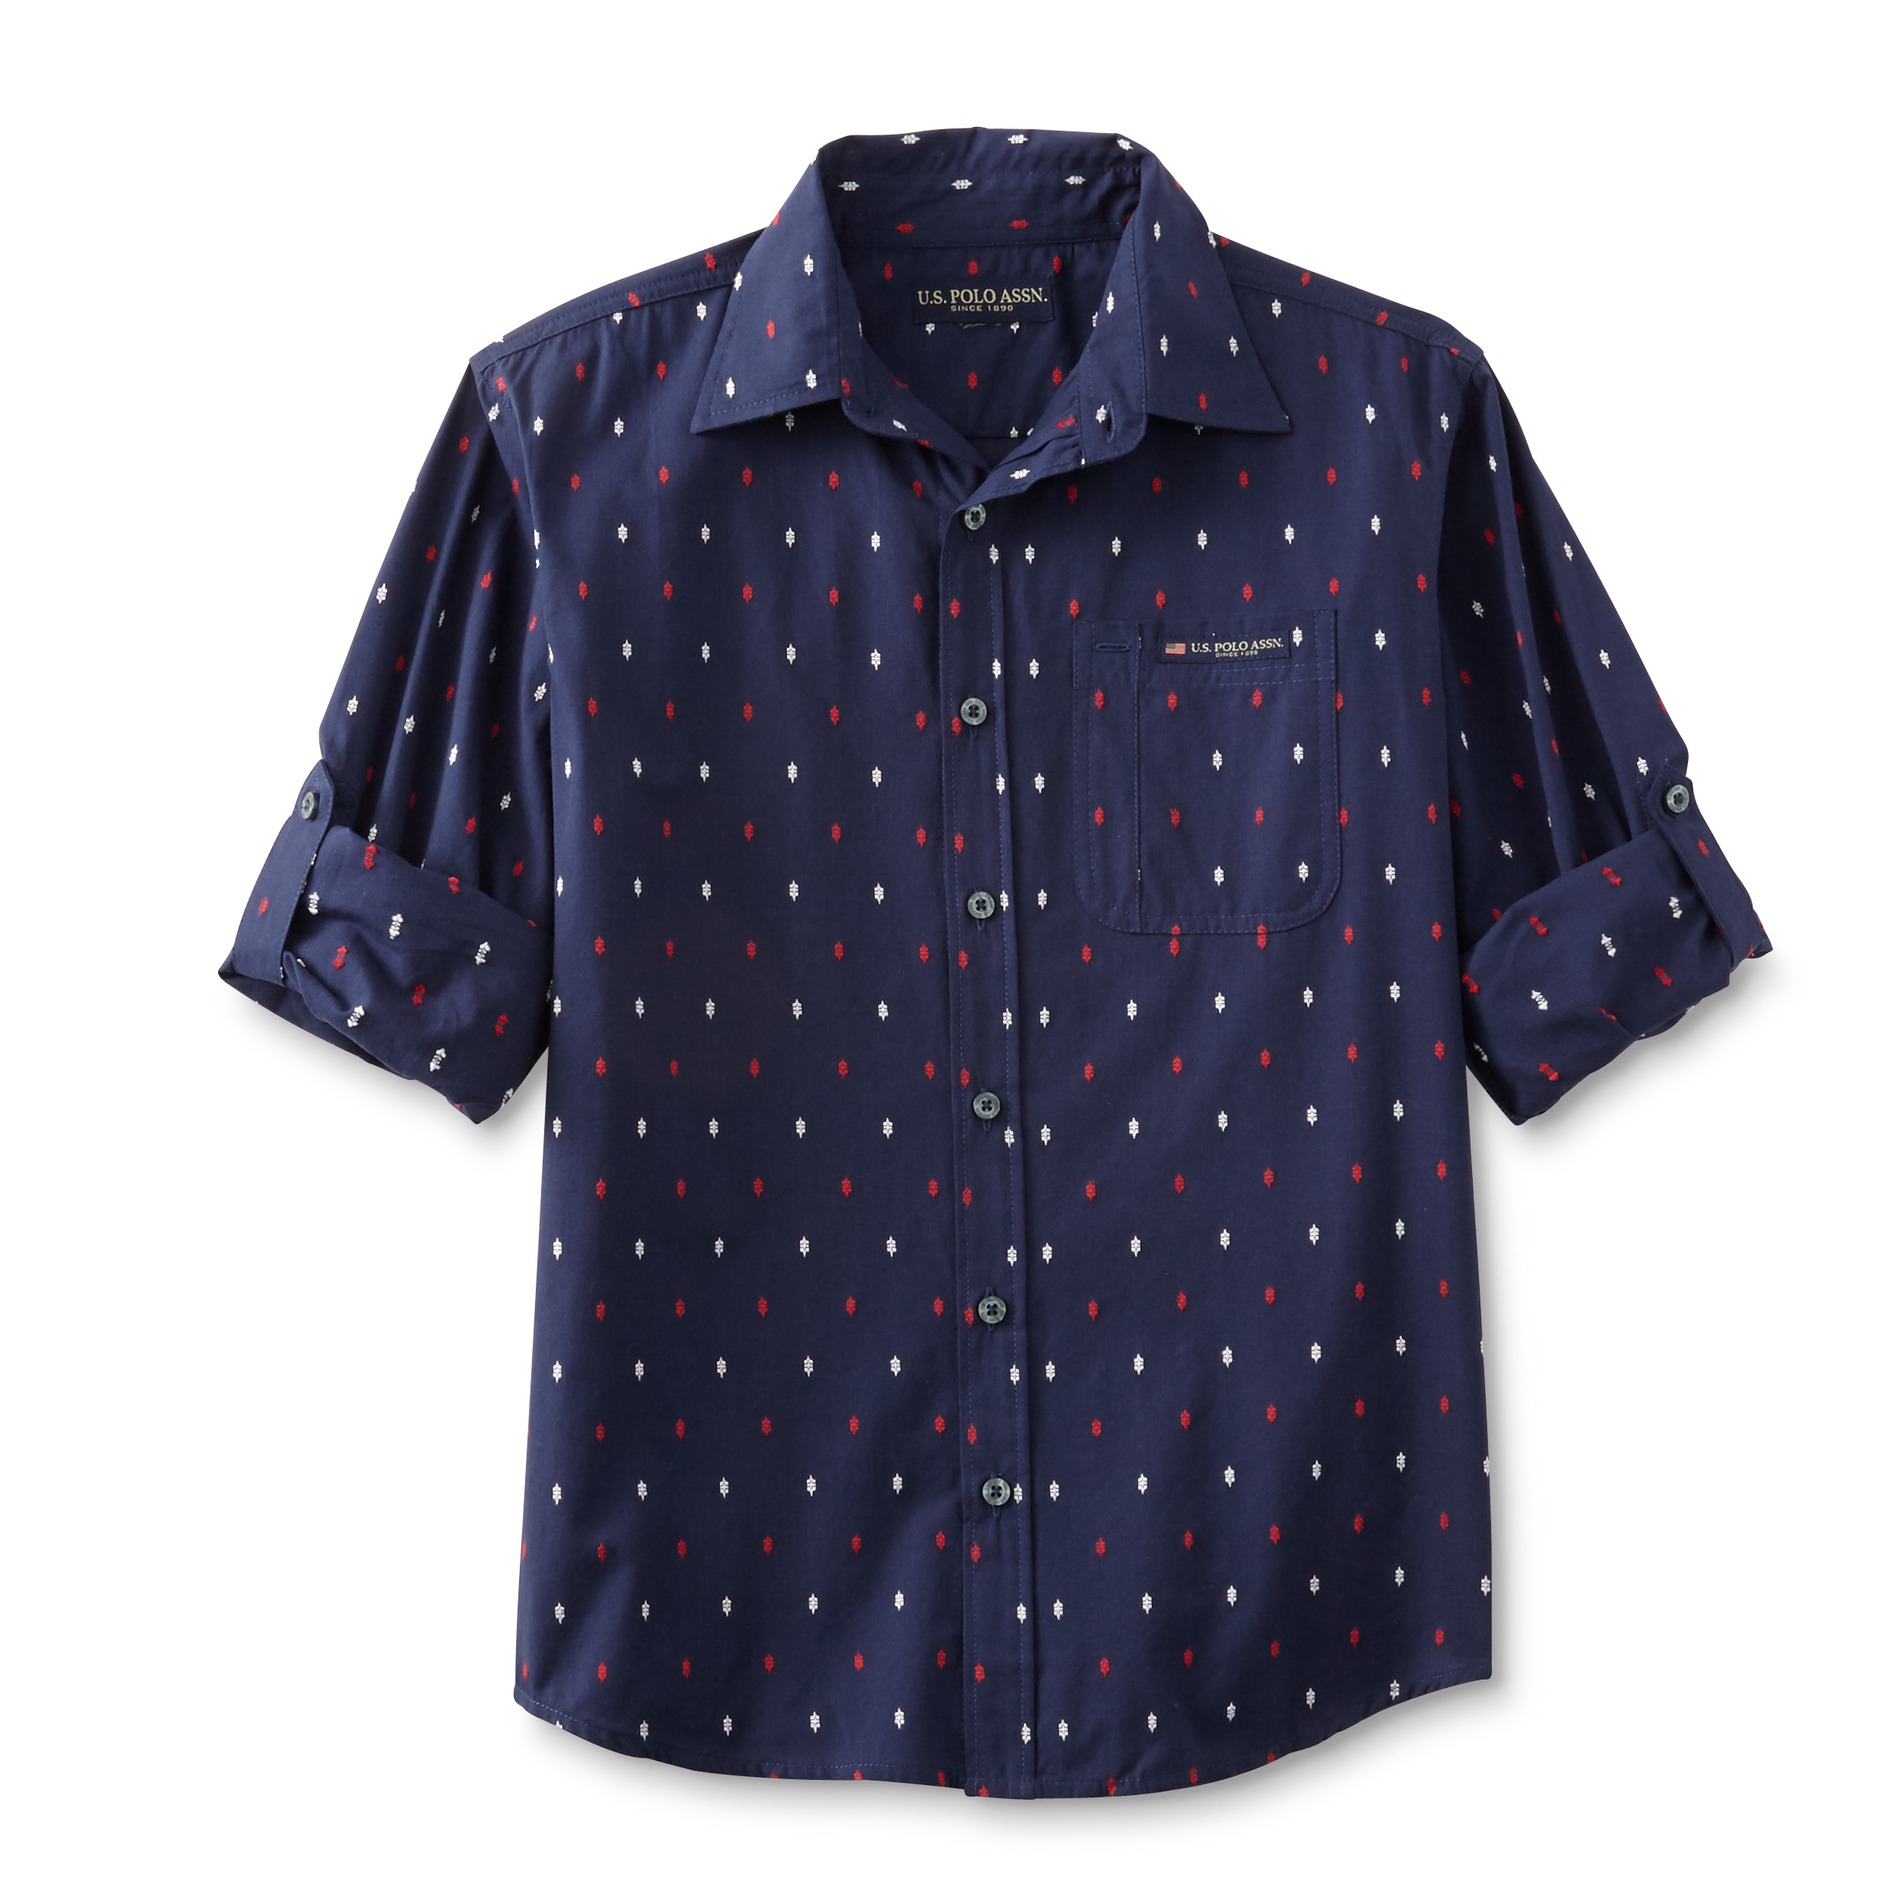 U.S. Polo Assn. Boy's Button-Front Shirt - Geometric